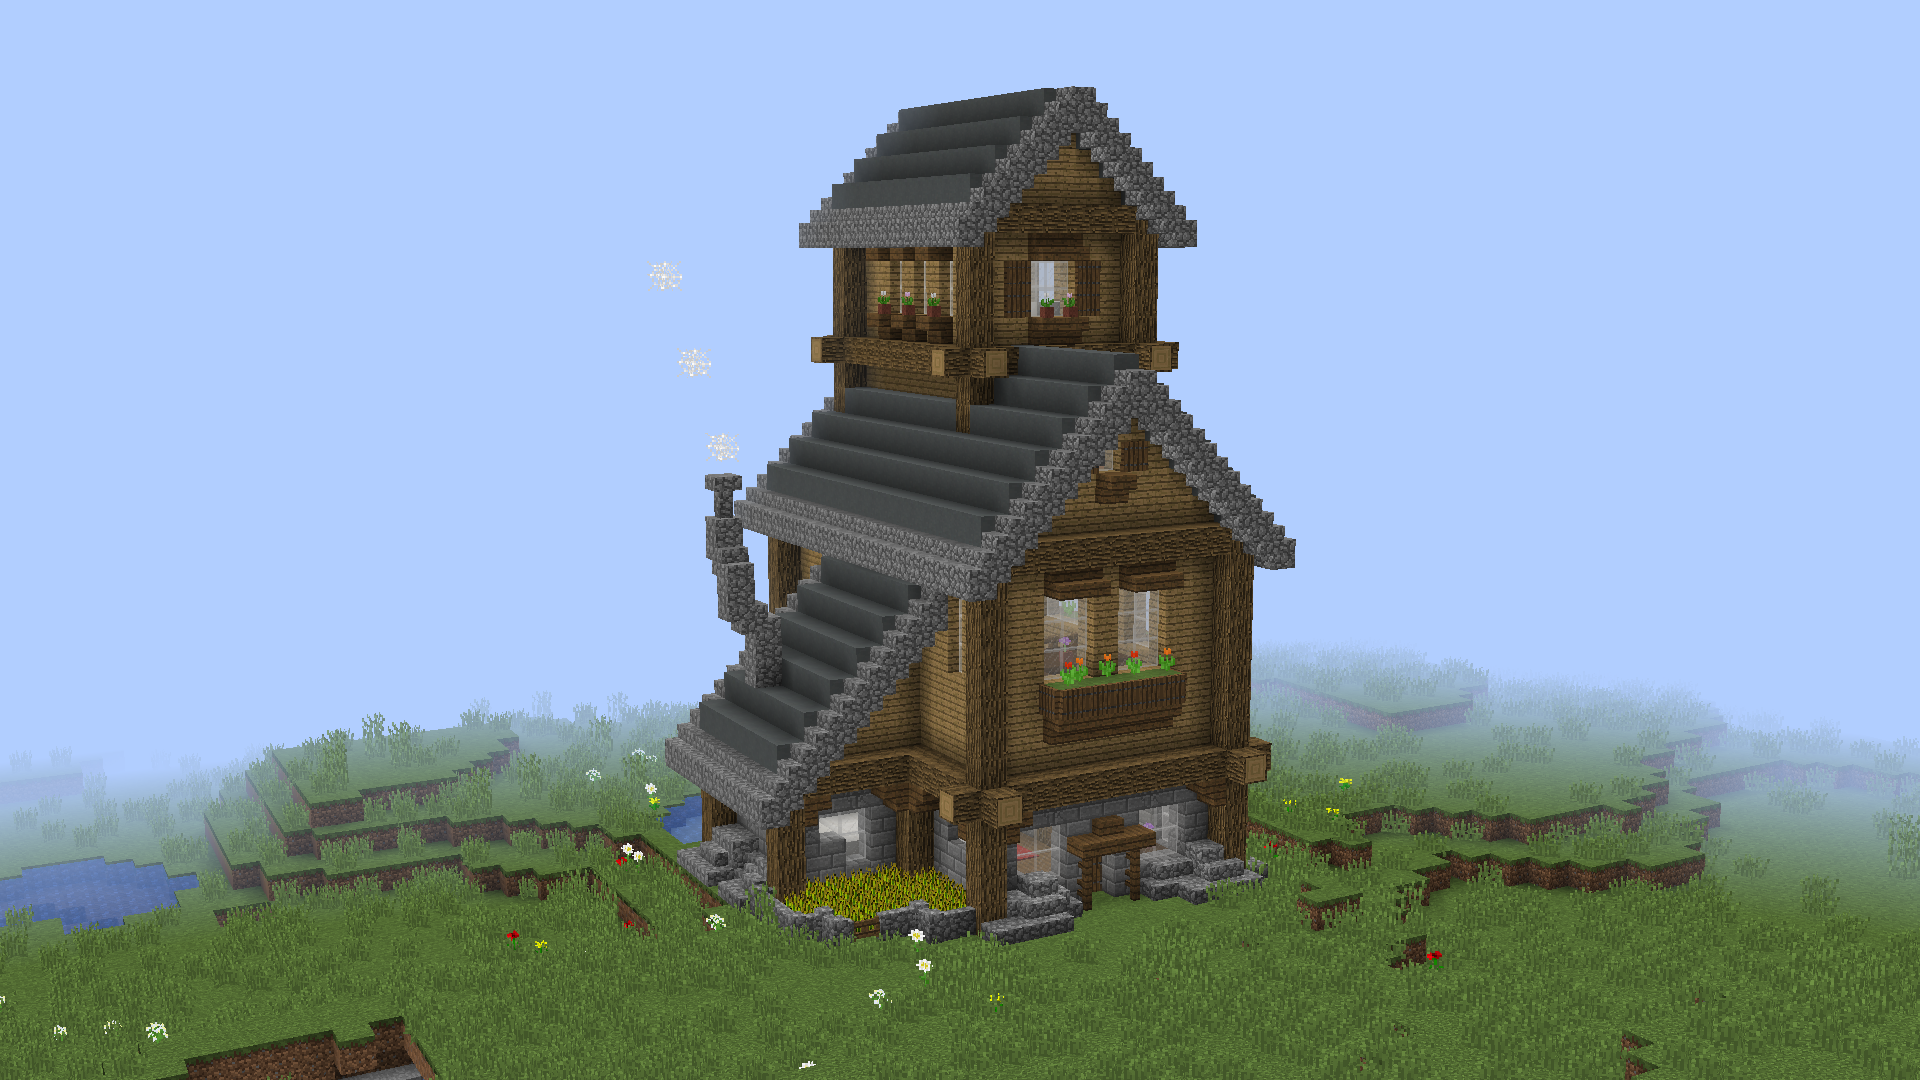 Tải về Small Rustic House cho Minecraft 1.13.2